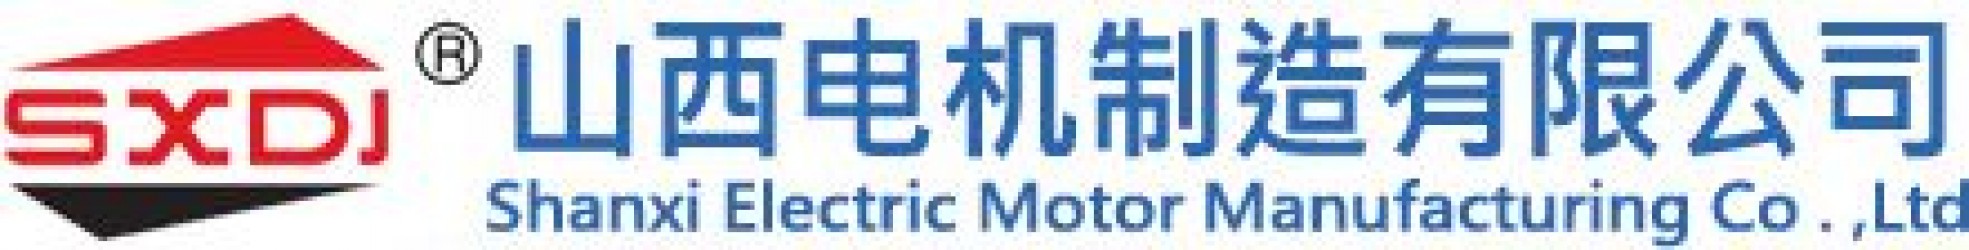 Shanxi Electric Motor Manufacturing CO. LTD